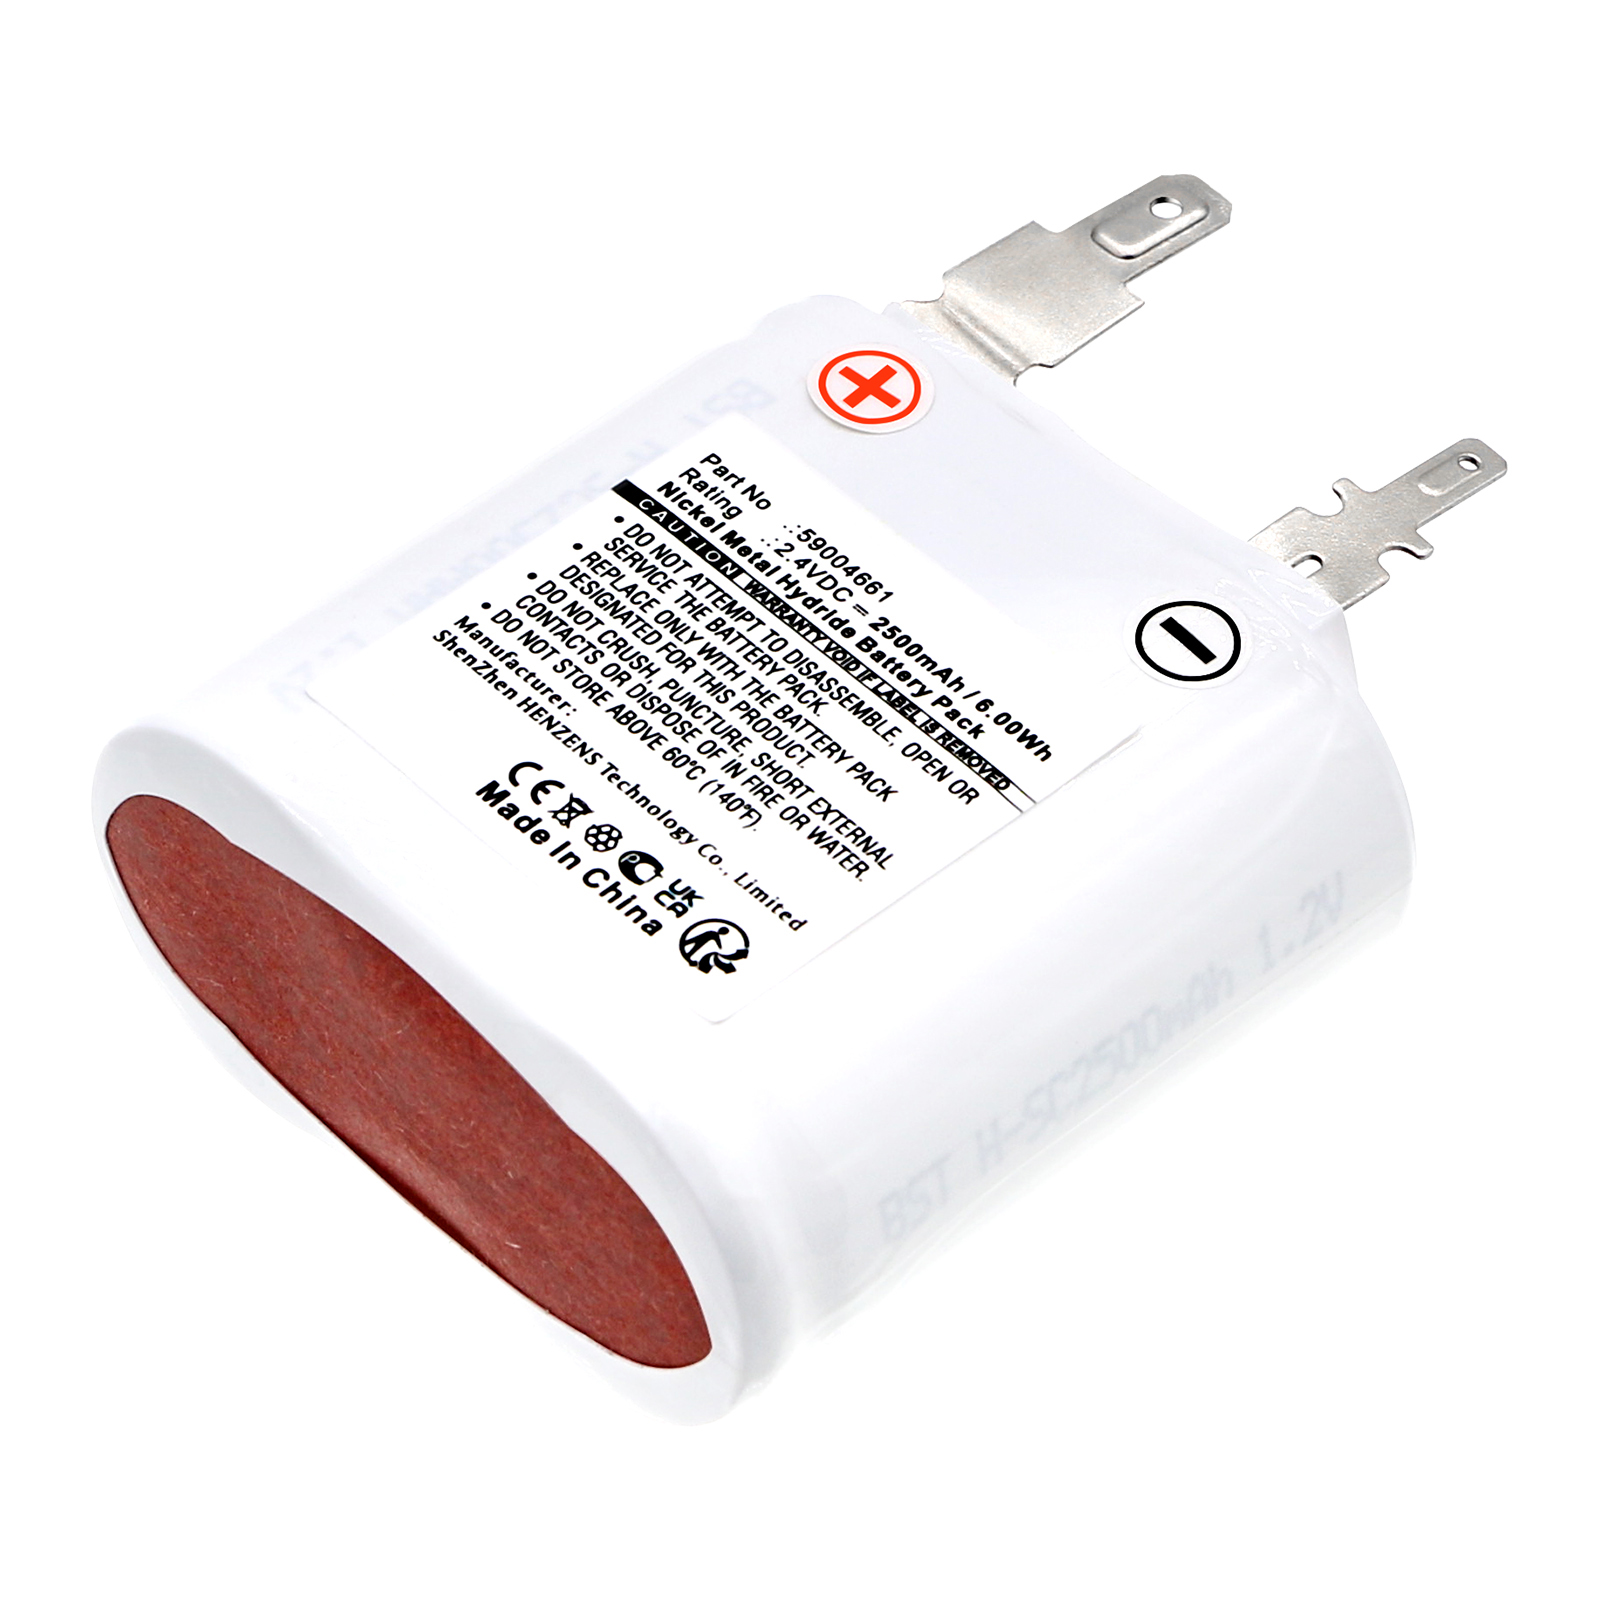 Synergy Digital Emergency Lighting Battery, Compatible with Thorn Voyager 59004661 Emergency Lighting Battery (Ni-MH, 2.4V, 2500mAh)